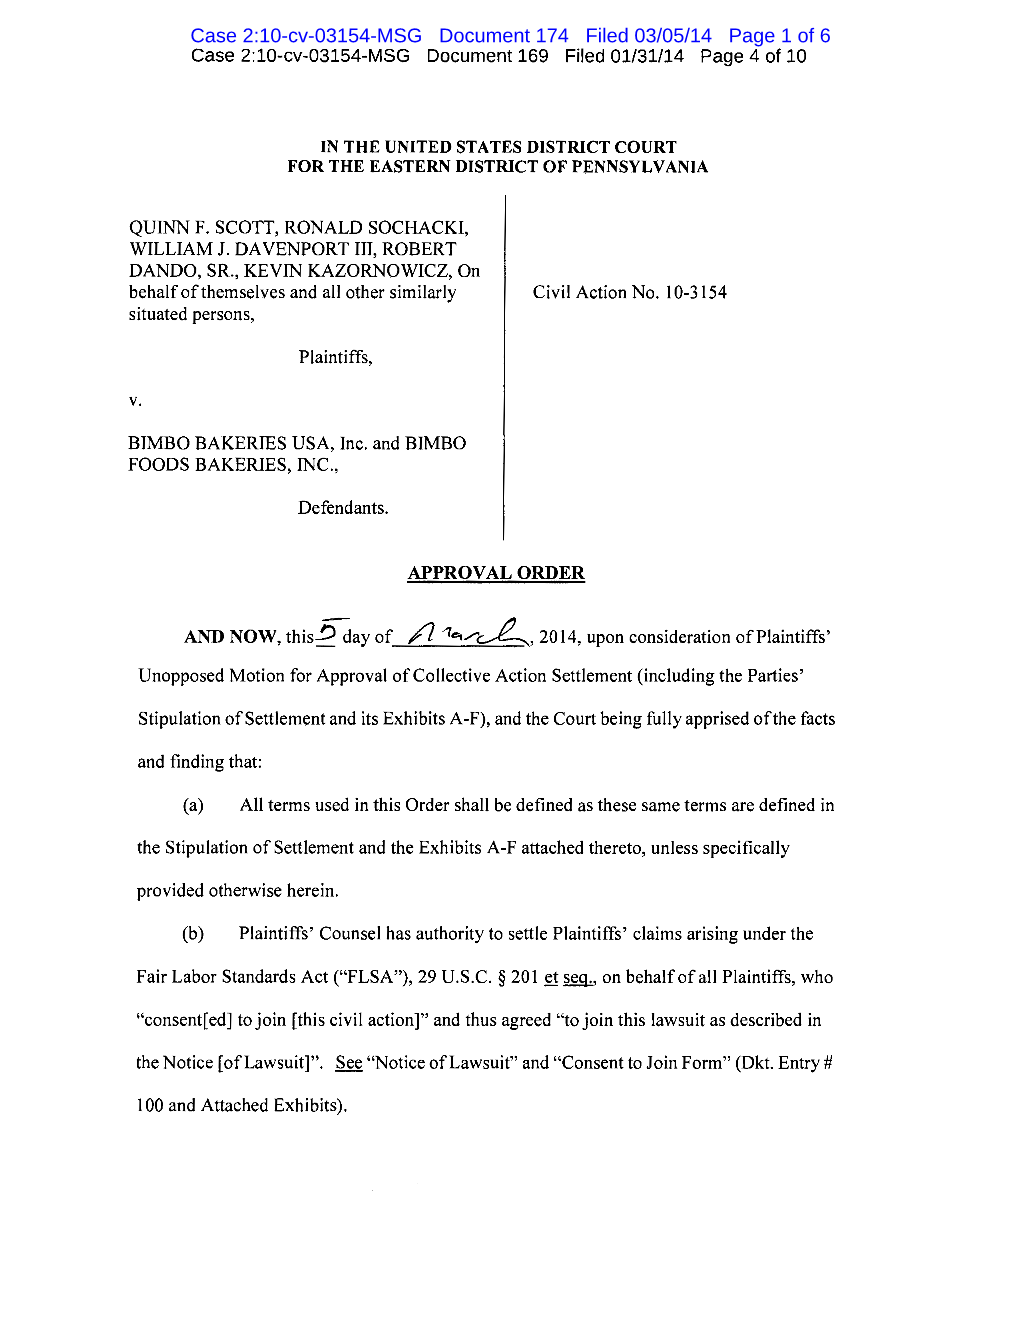 V. Case 2:10-Cv-03154-MSG Document 174 Filed 03/05/14 Page